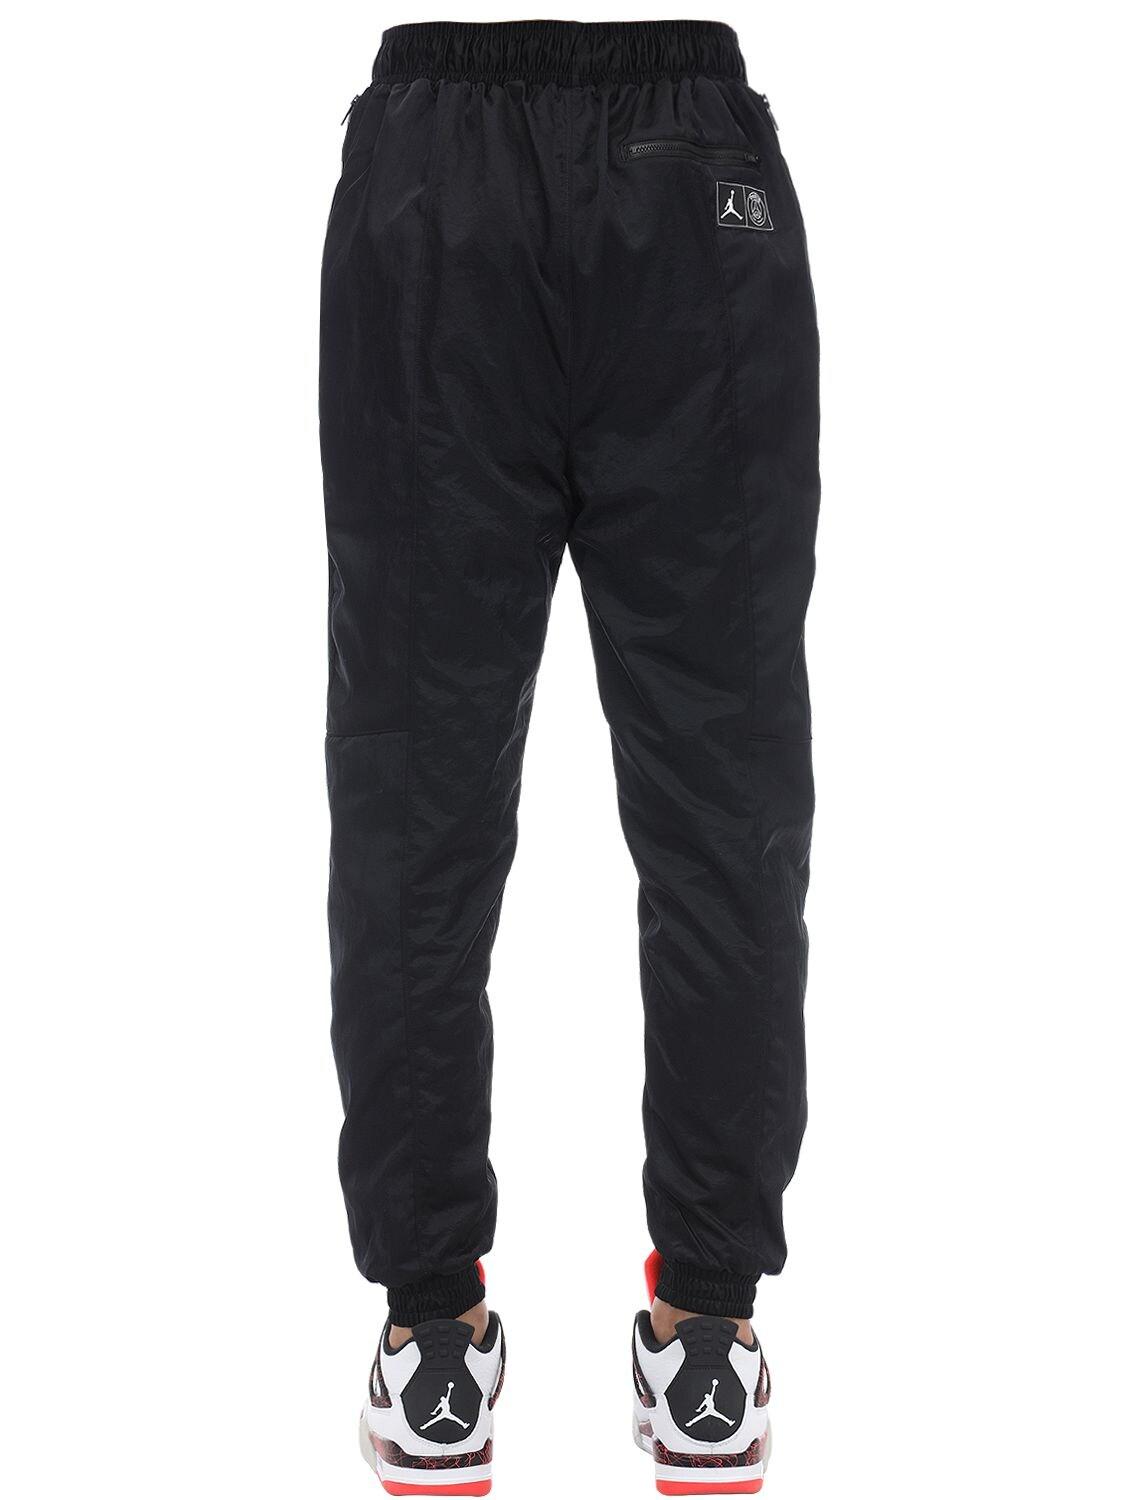 Nike Synthetic Psg Nylon Sweatpants in Black for Men - Lyst